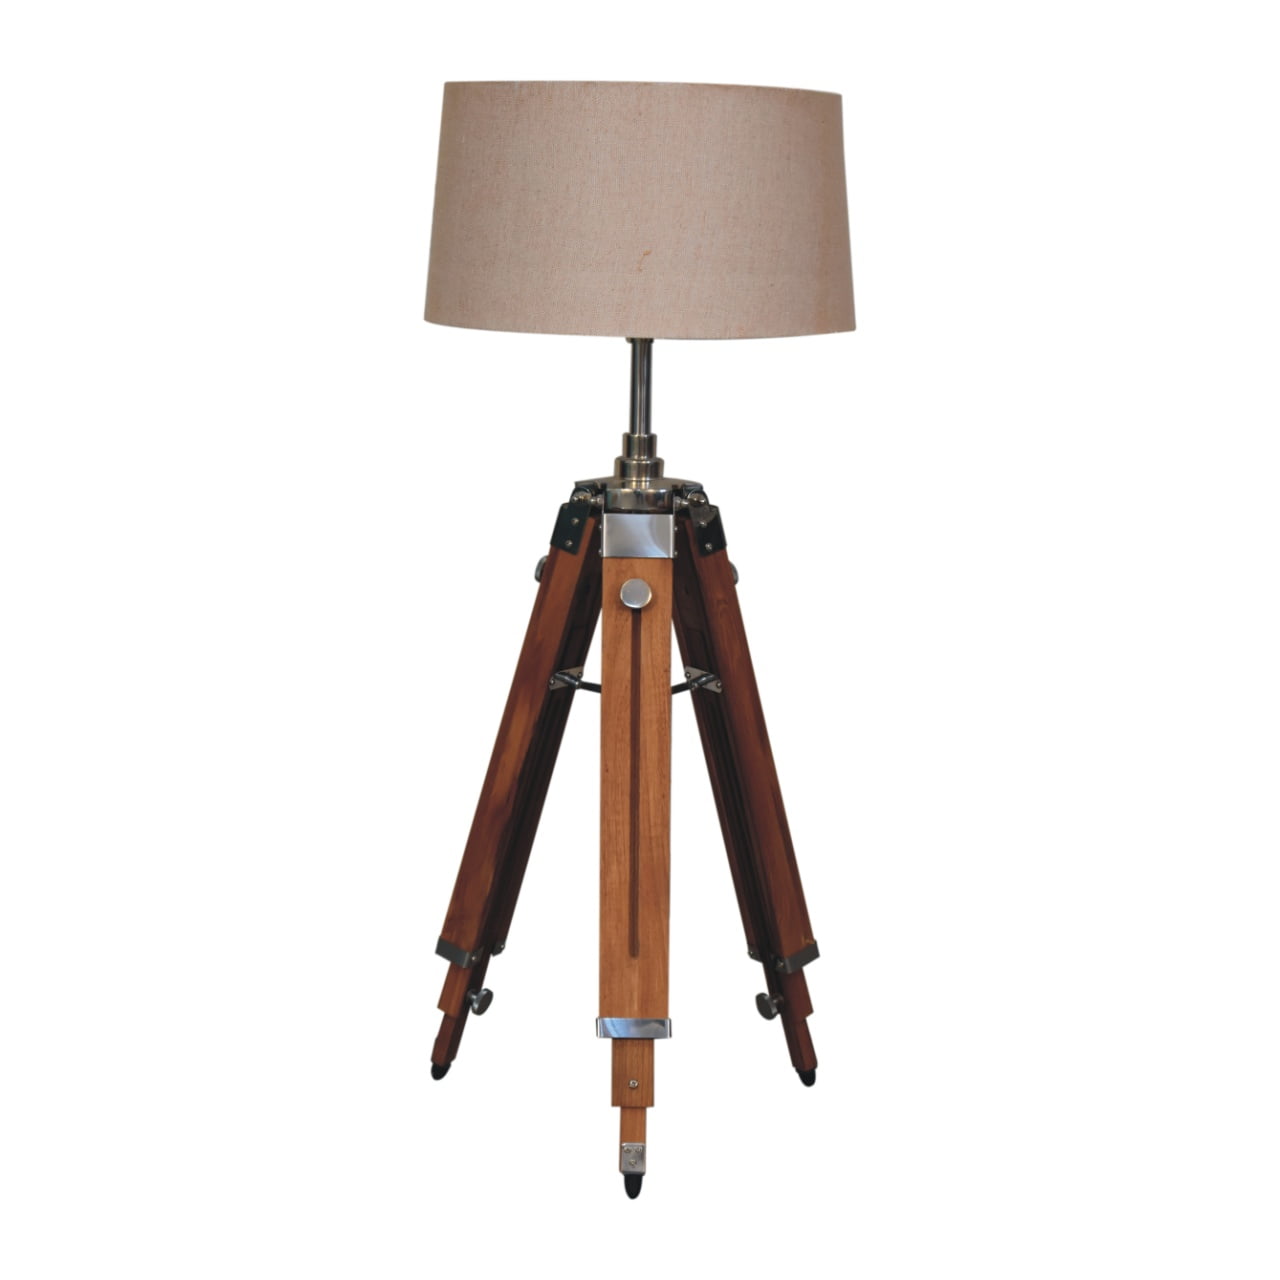 View Wooden Tripod Floor Lamp information